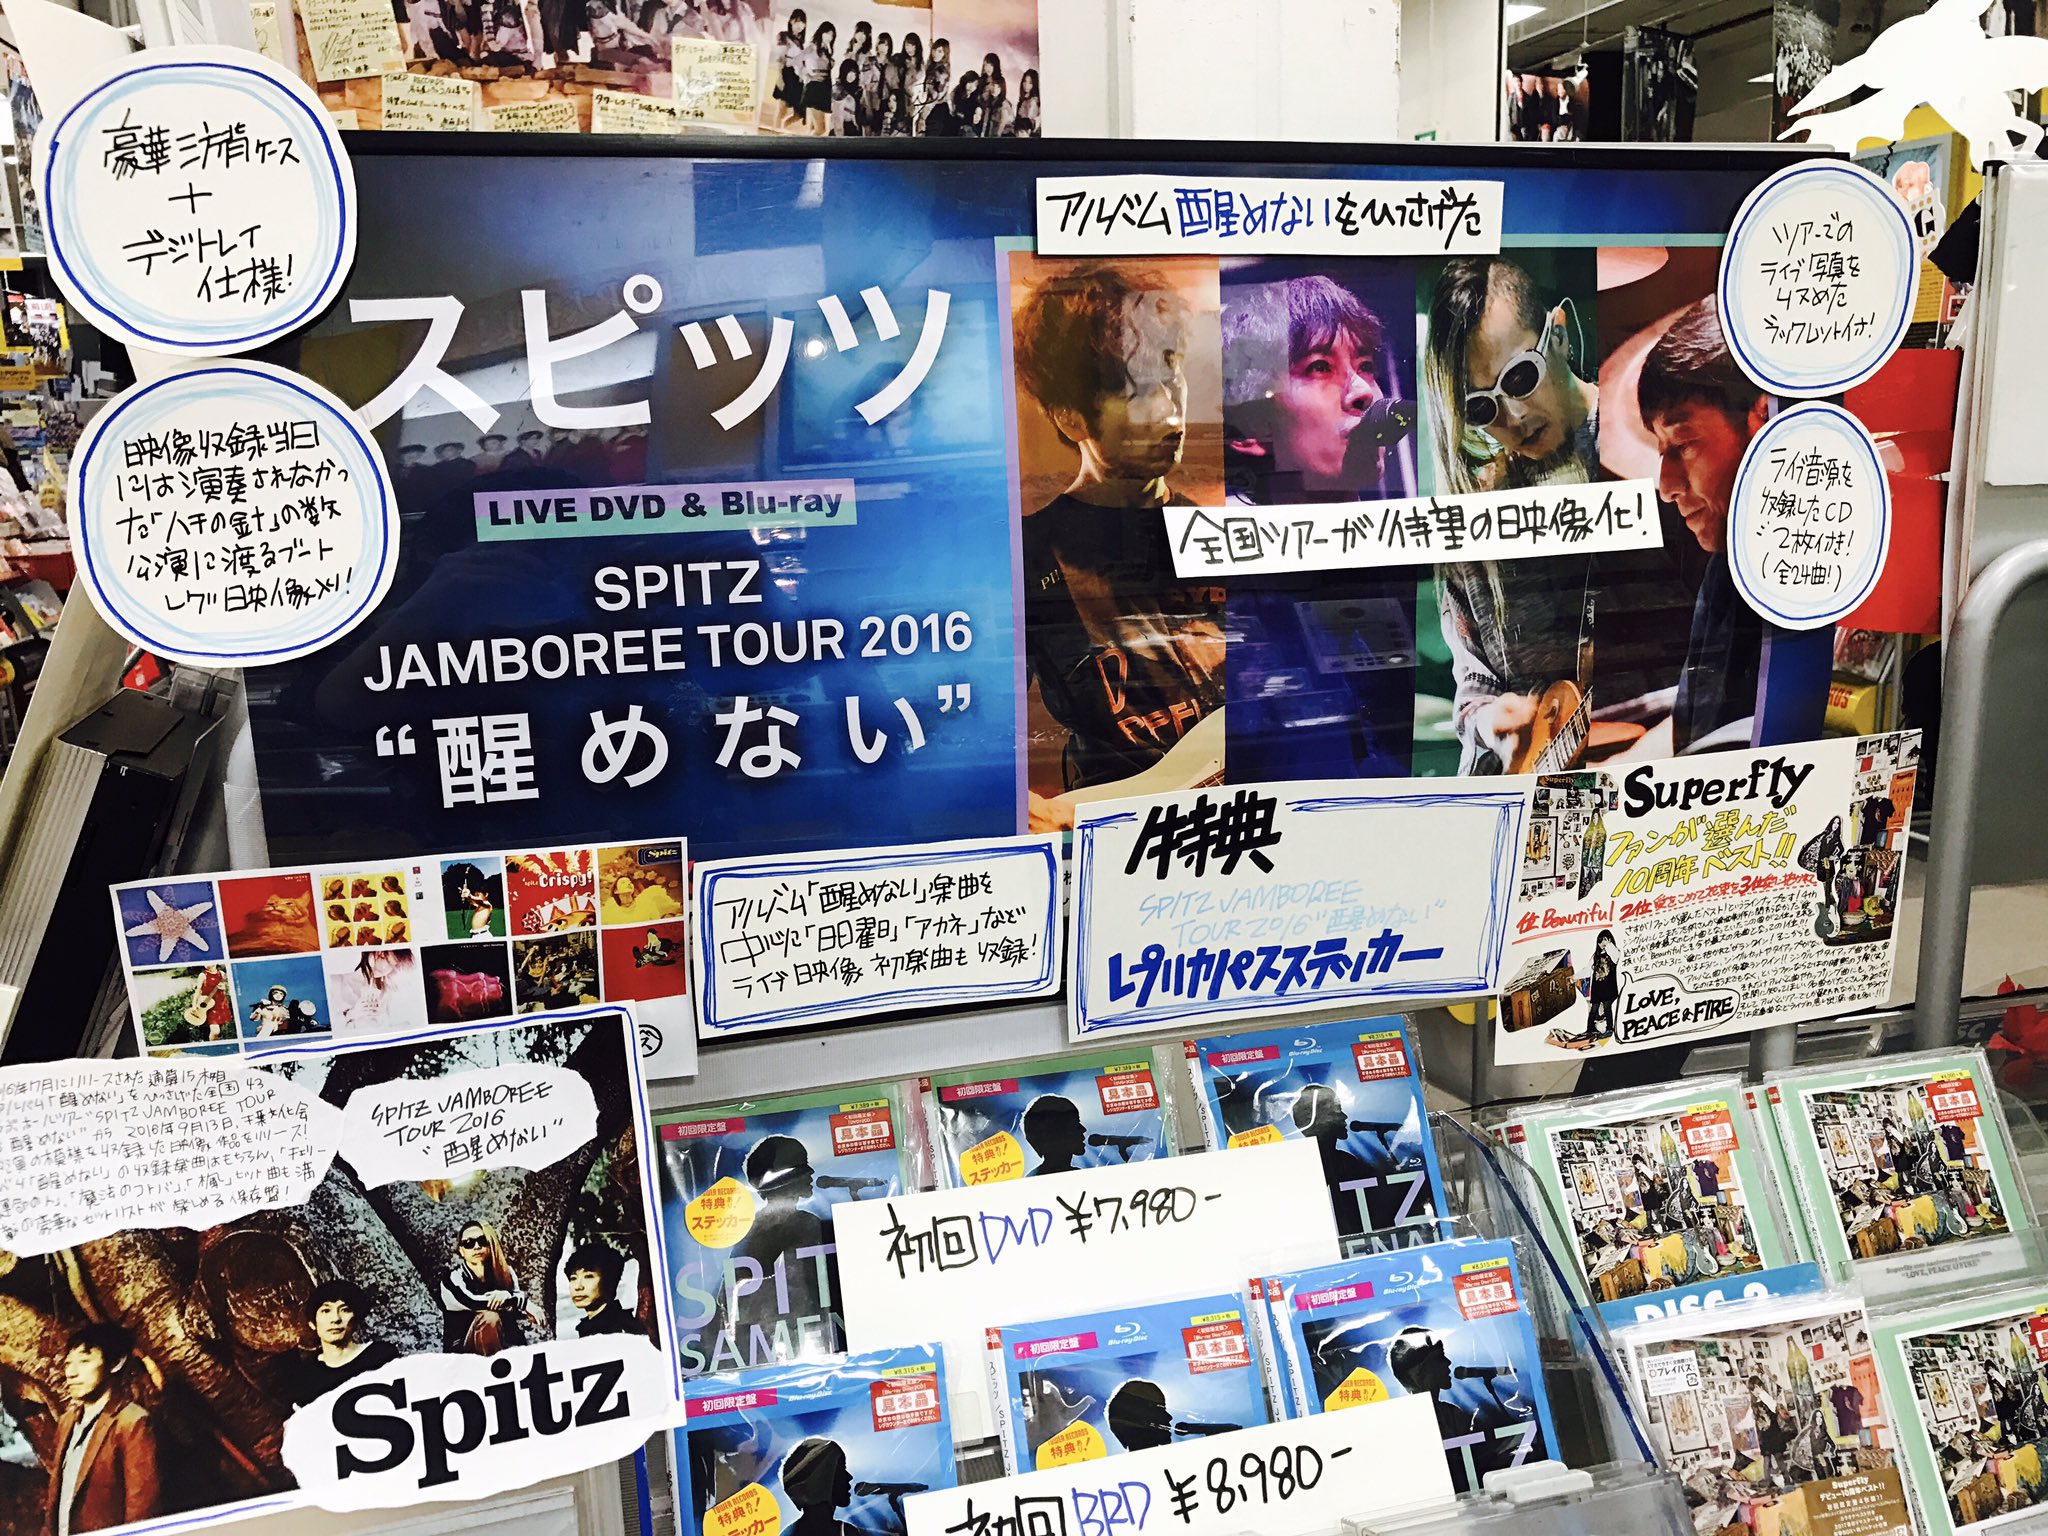 SPITZ JAMBOREE TOUR 2016 “醒めない" 初回限定盤 BD